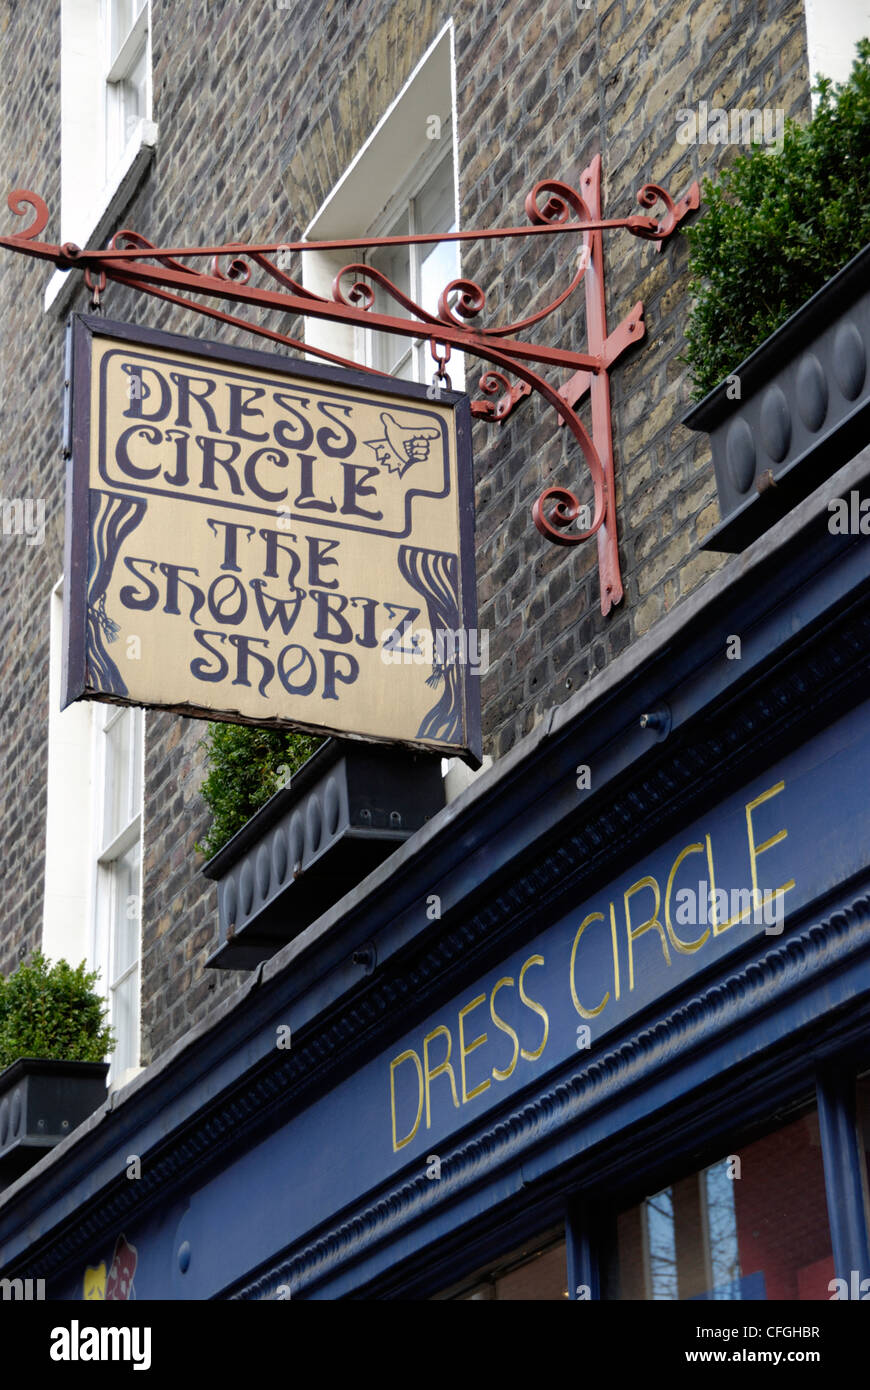 Dress Circle Showbiz-Shop in Covent Garden, London, England Stockfoto